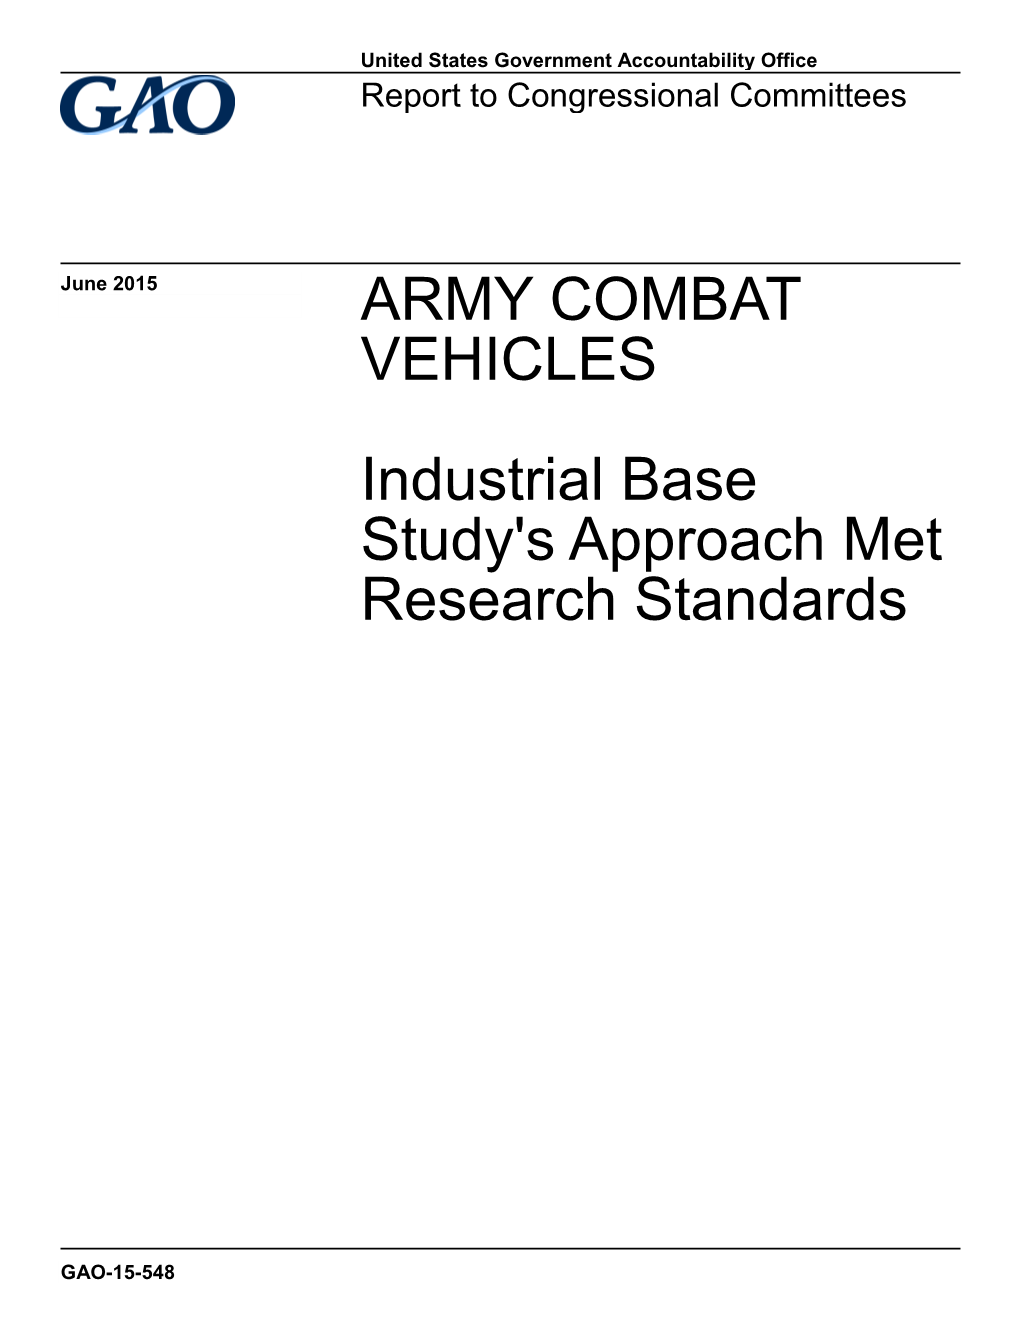 Gao-15-548, Army Combat Vehicles